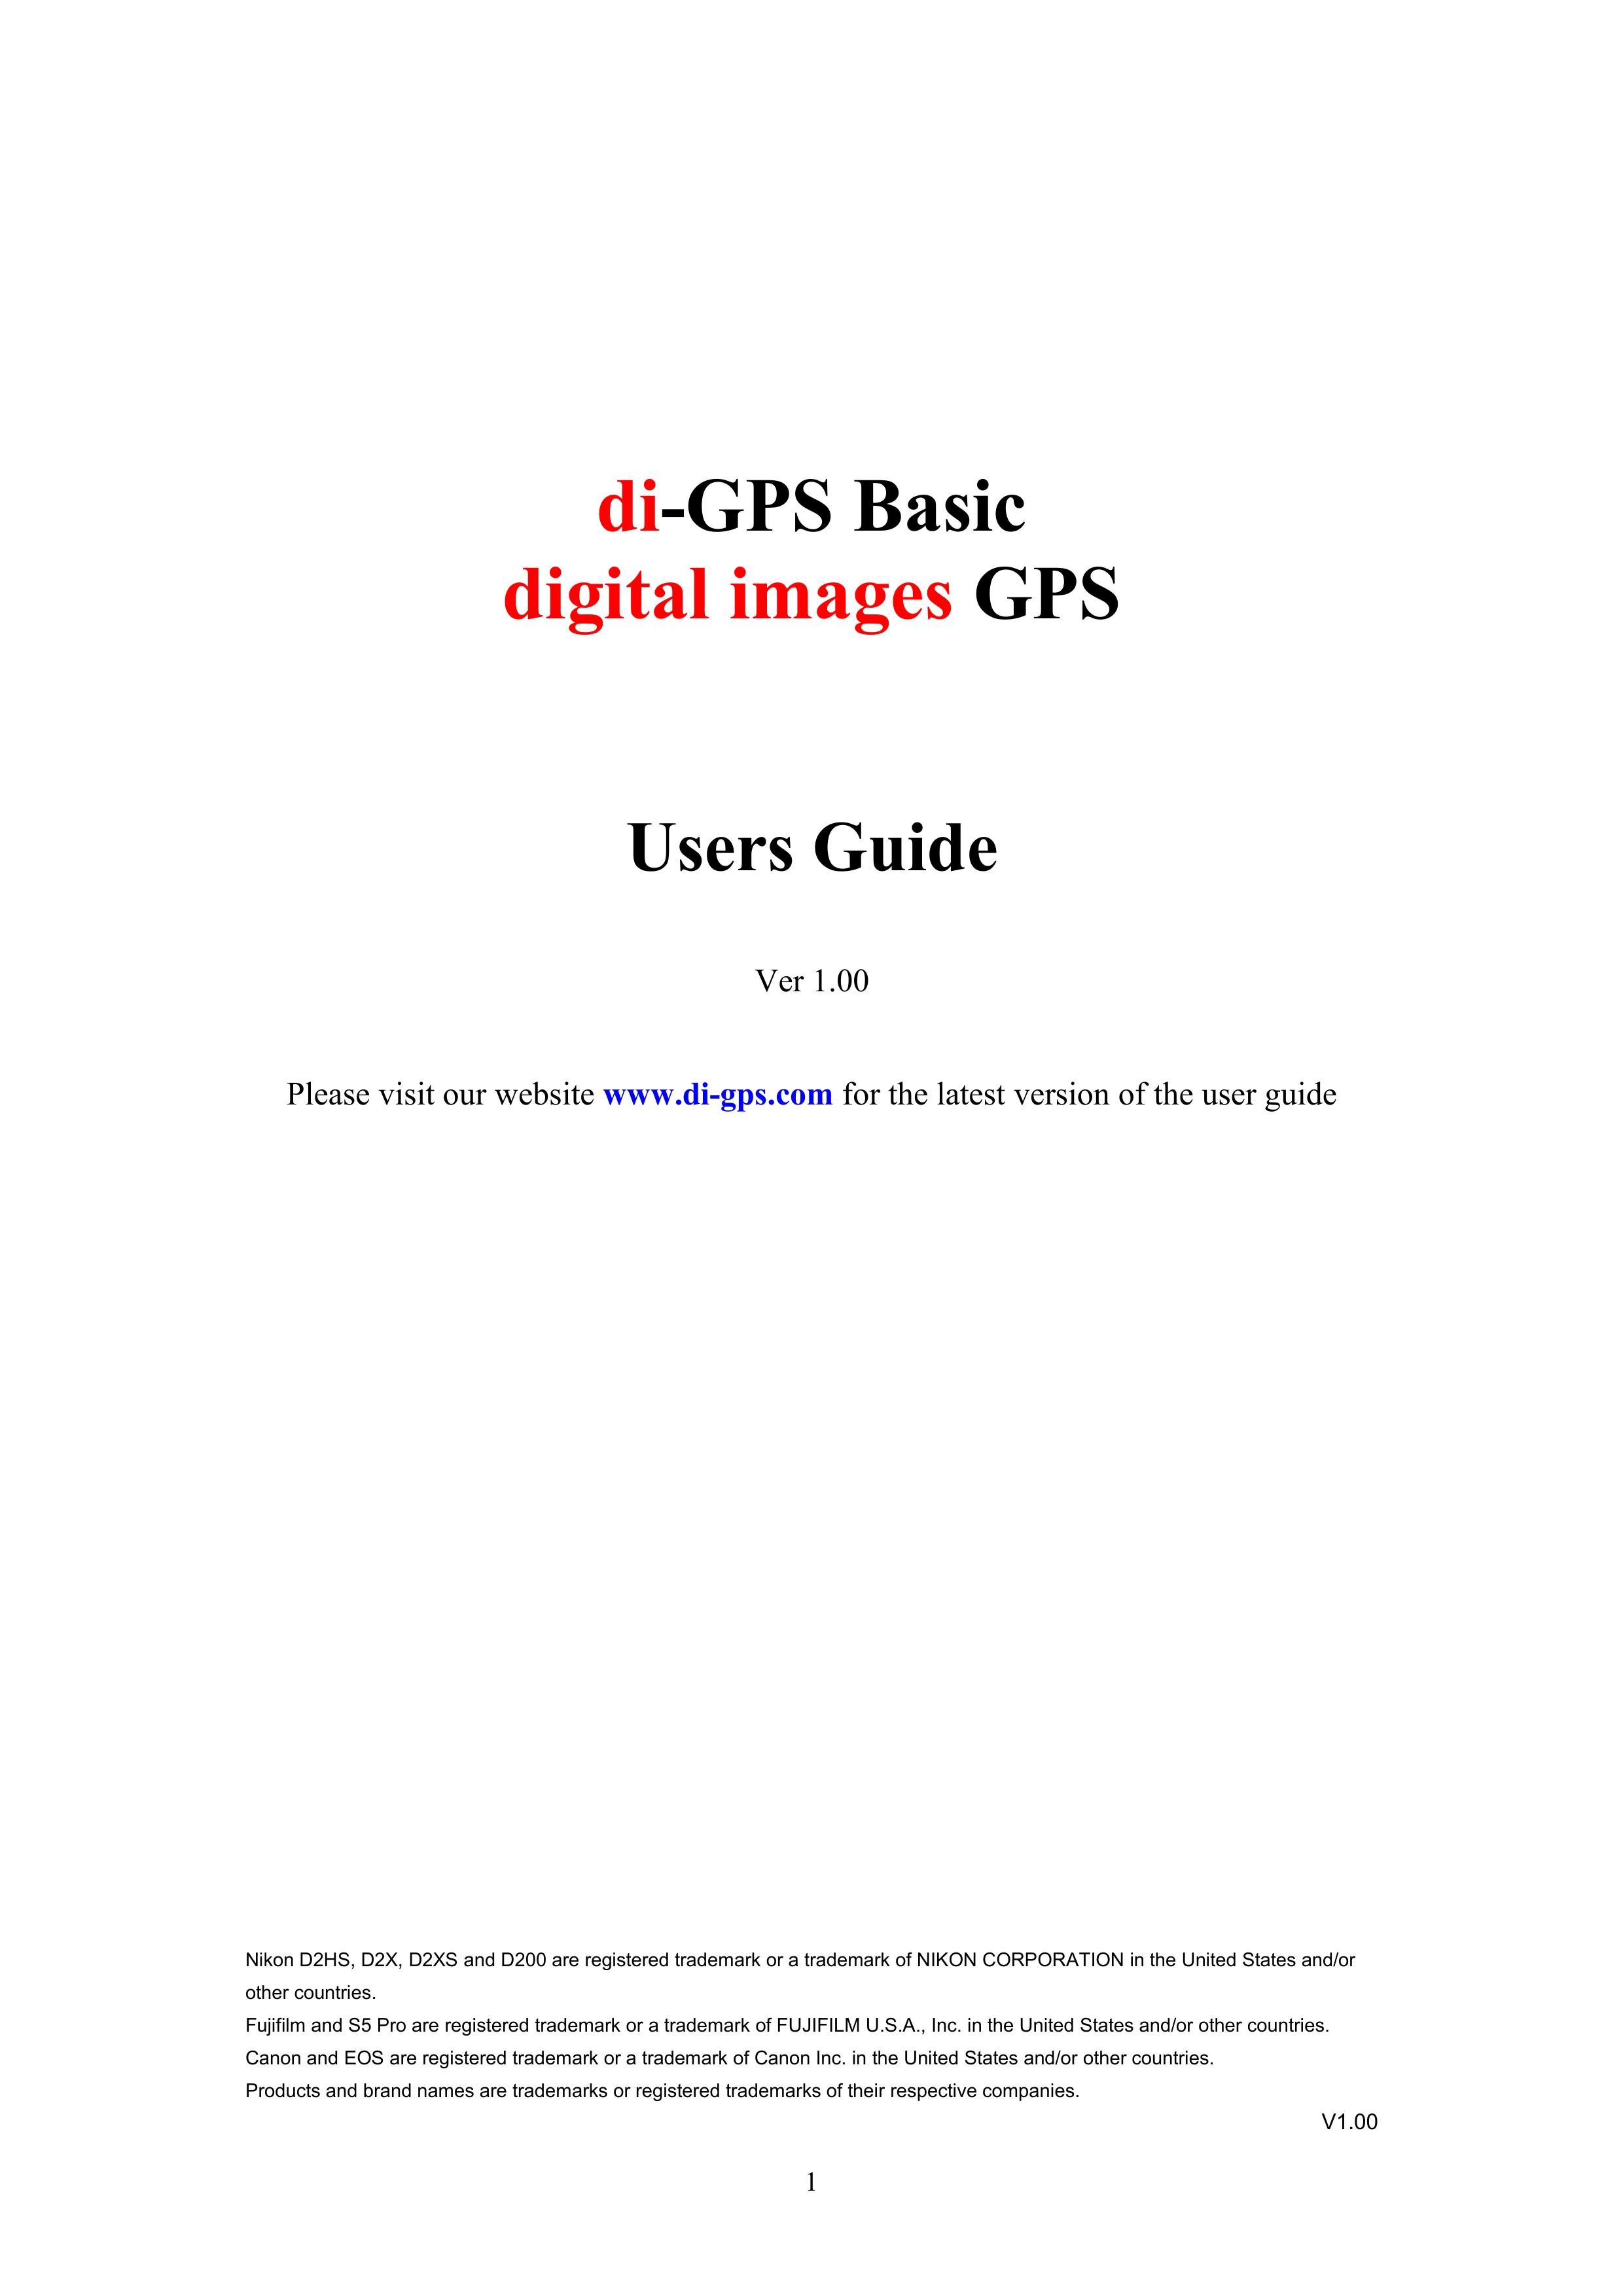 Nikon ver1.00 Marine GPS System User Manual